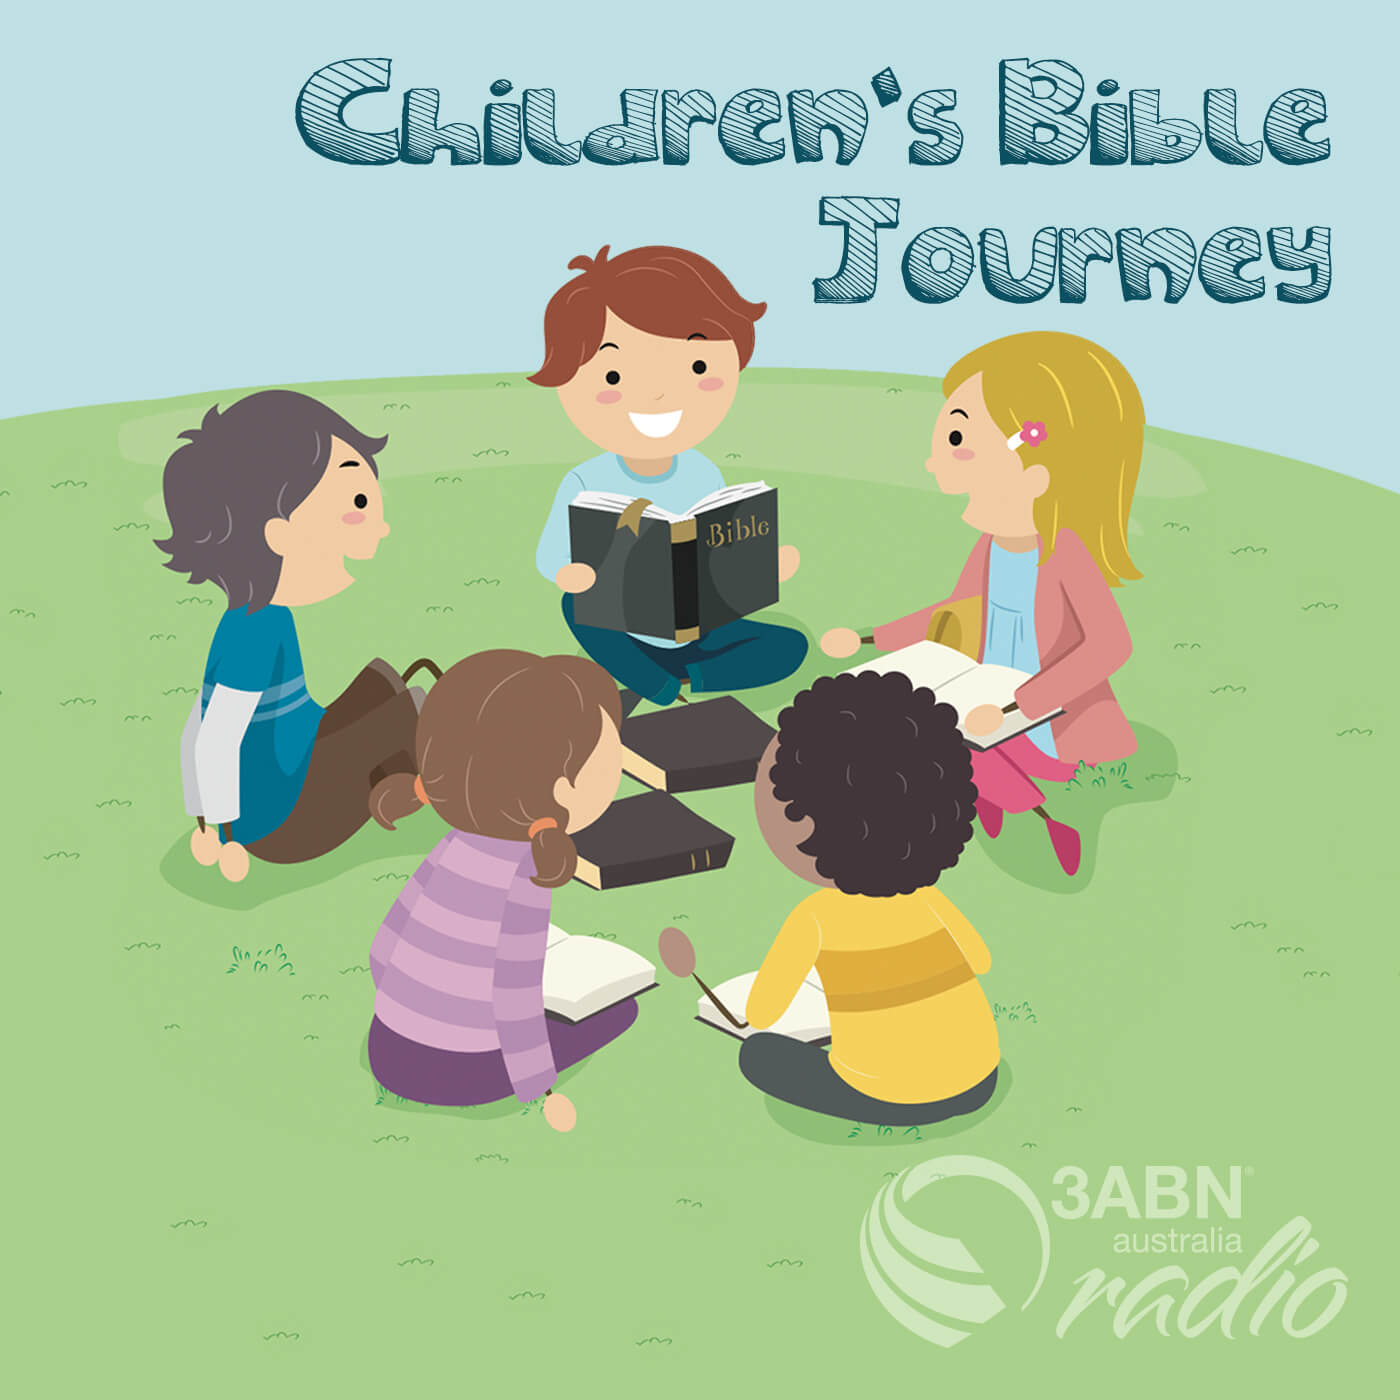 Children's Bible Journey - 2173